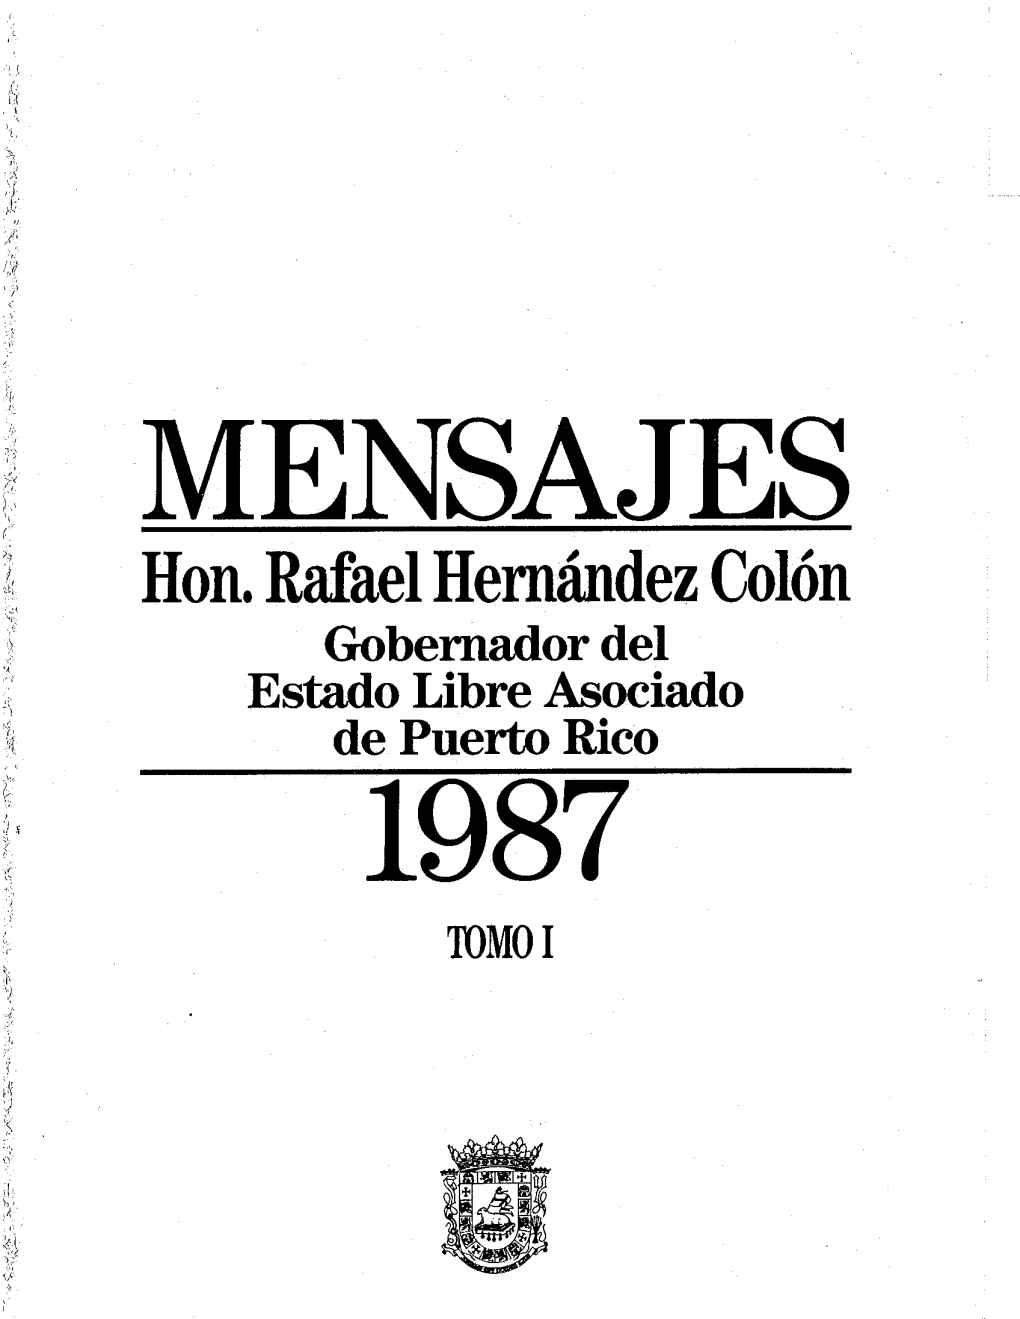 Hon. Rafael Hernández Colón Gobernador Del Estado Libre Asociado De Puerto Rico 1987 TOMO I MENSAJES DEL GOBERNADOR DE PUERTO RICO HON